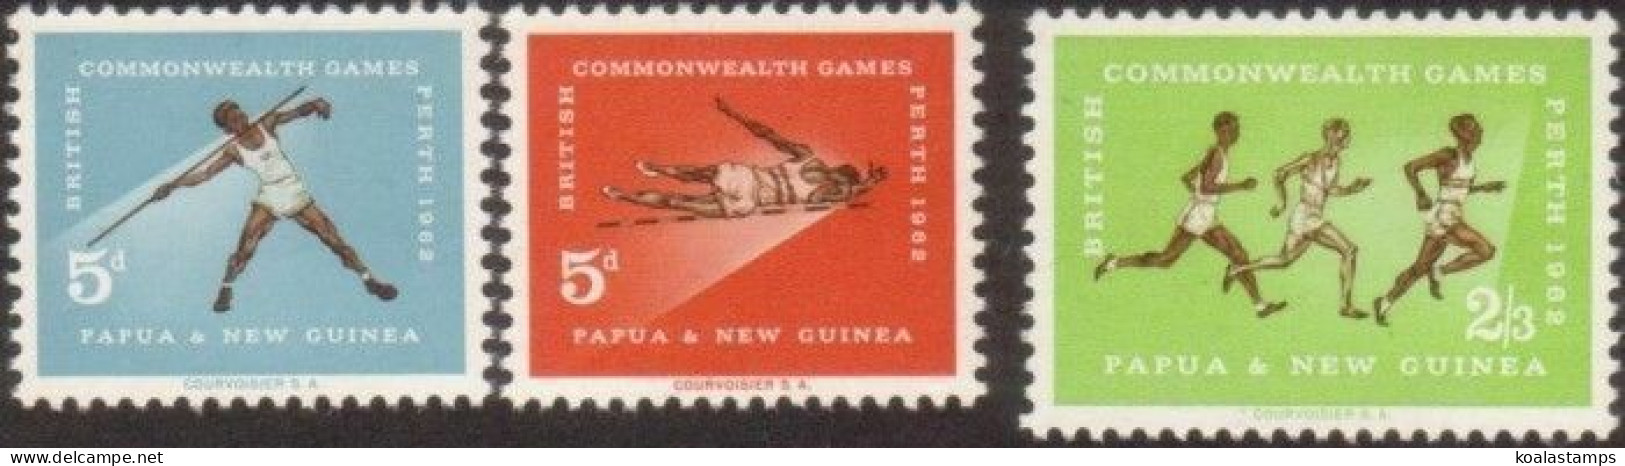 Papua New Guinea 1962 SG39-41 Commonwealth Games Set MLH - Papua New Guinea